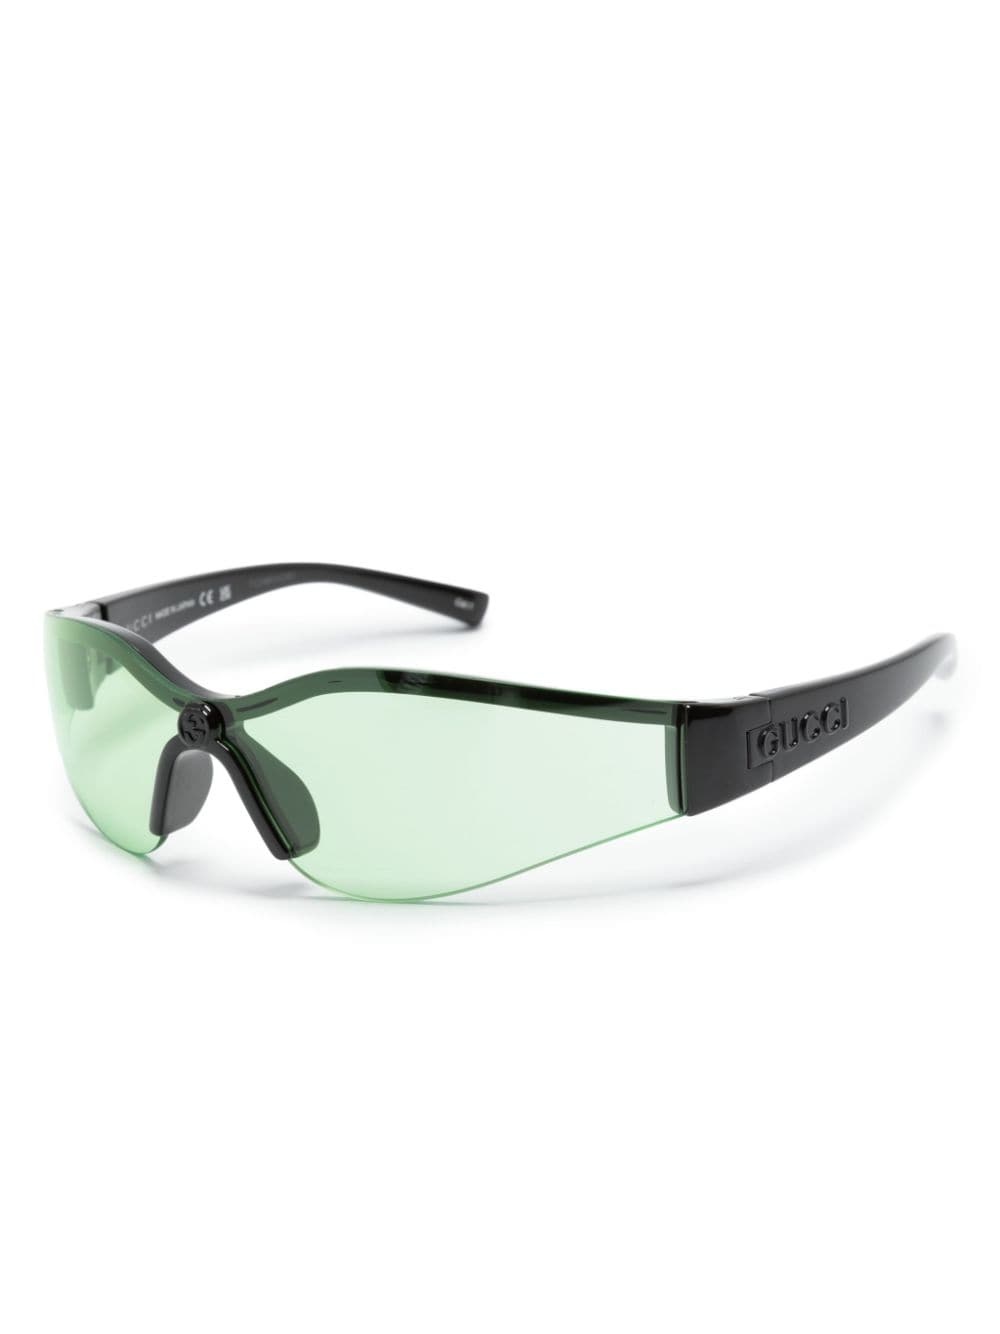 mask-frame sunglasses - 2